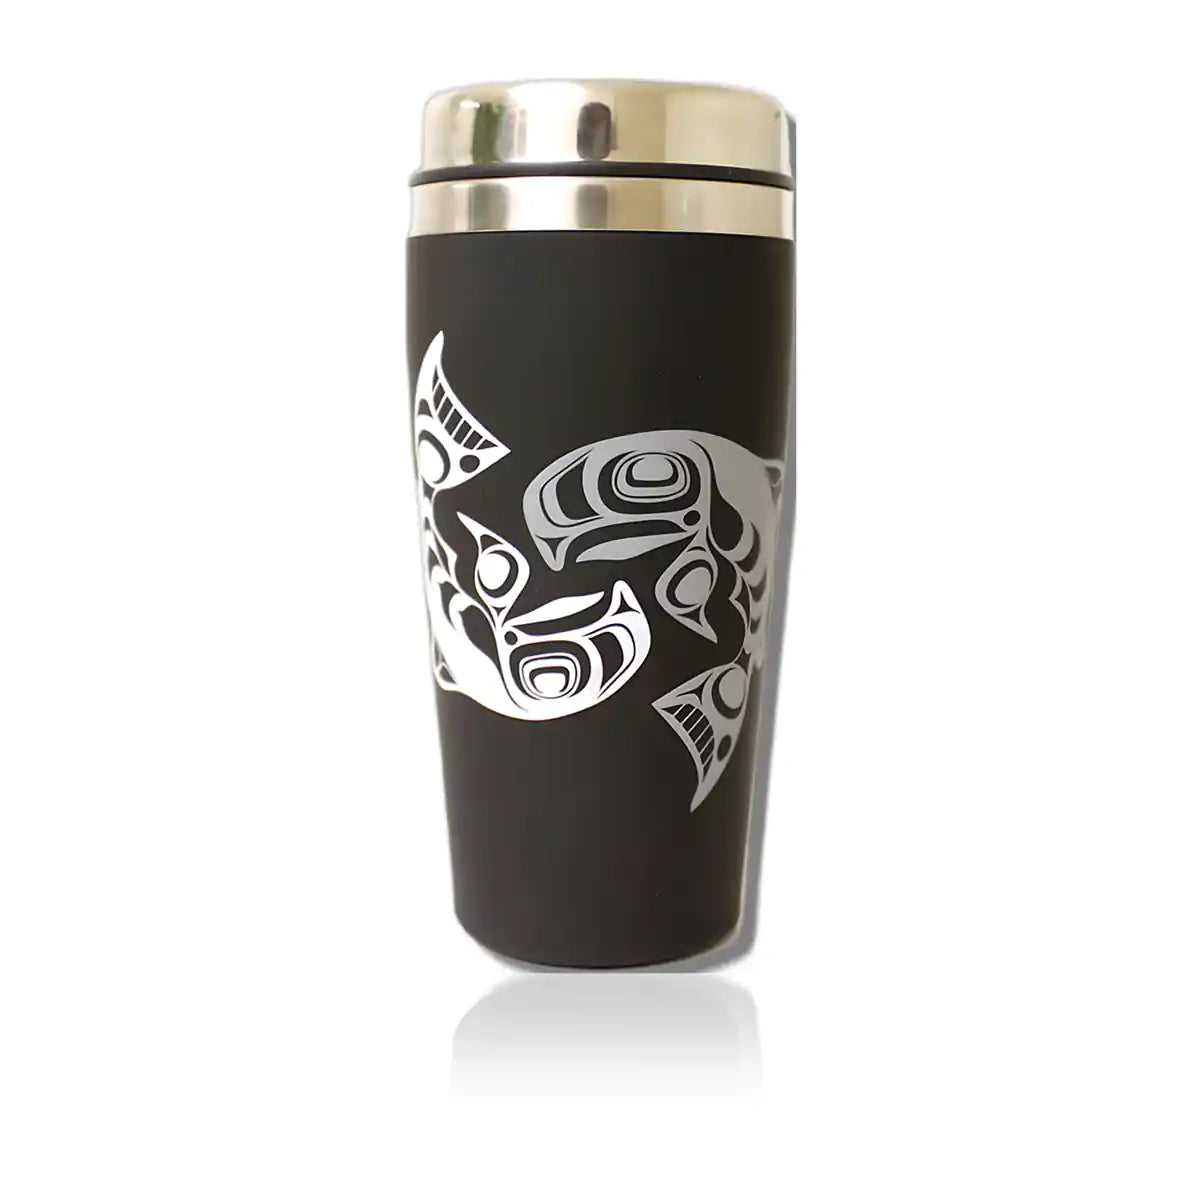 Native design salmon 16oz stainless steel travel mug